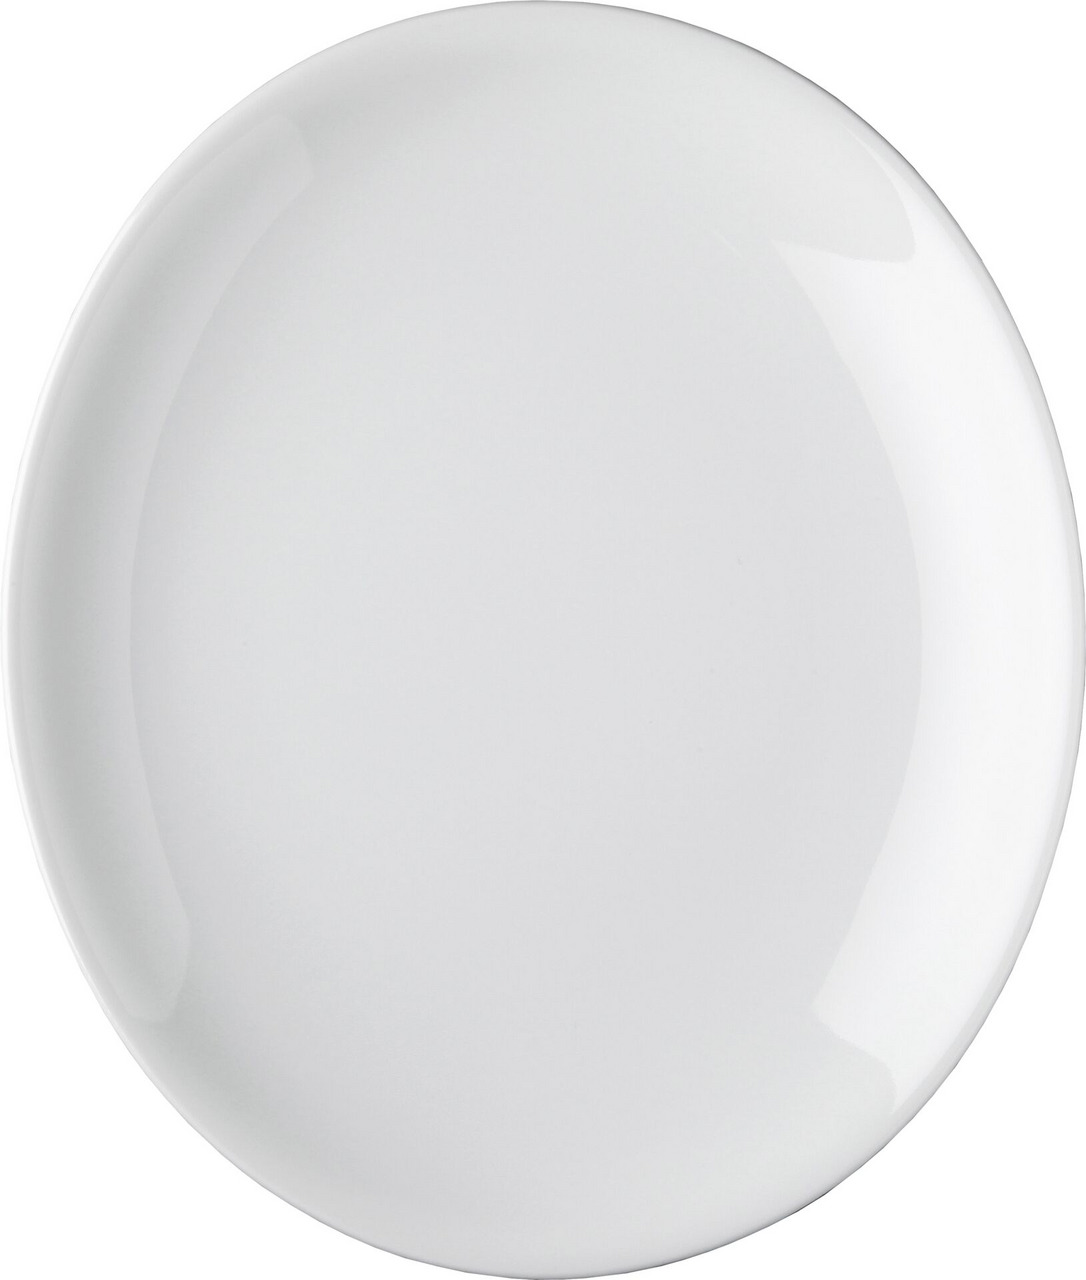 Platte oval "Rotondo" 34 x 29,5 cm Hotelporzellan